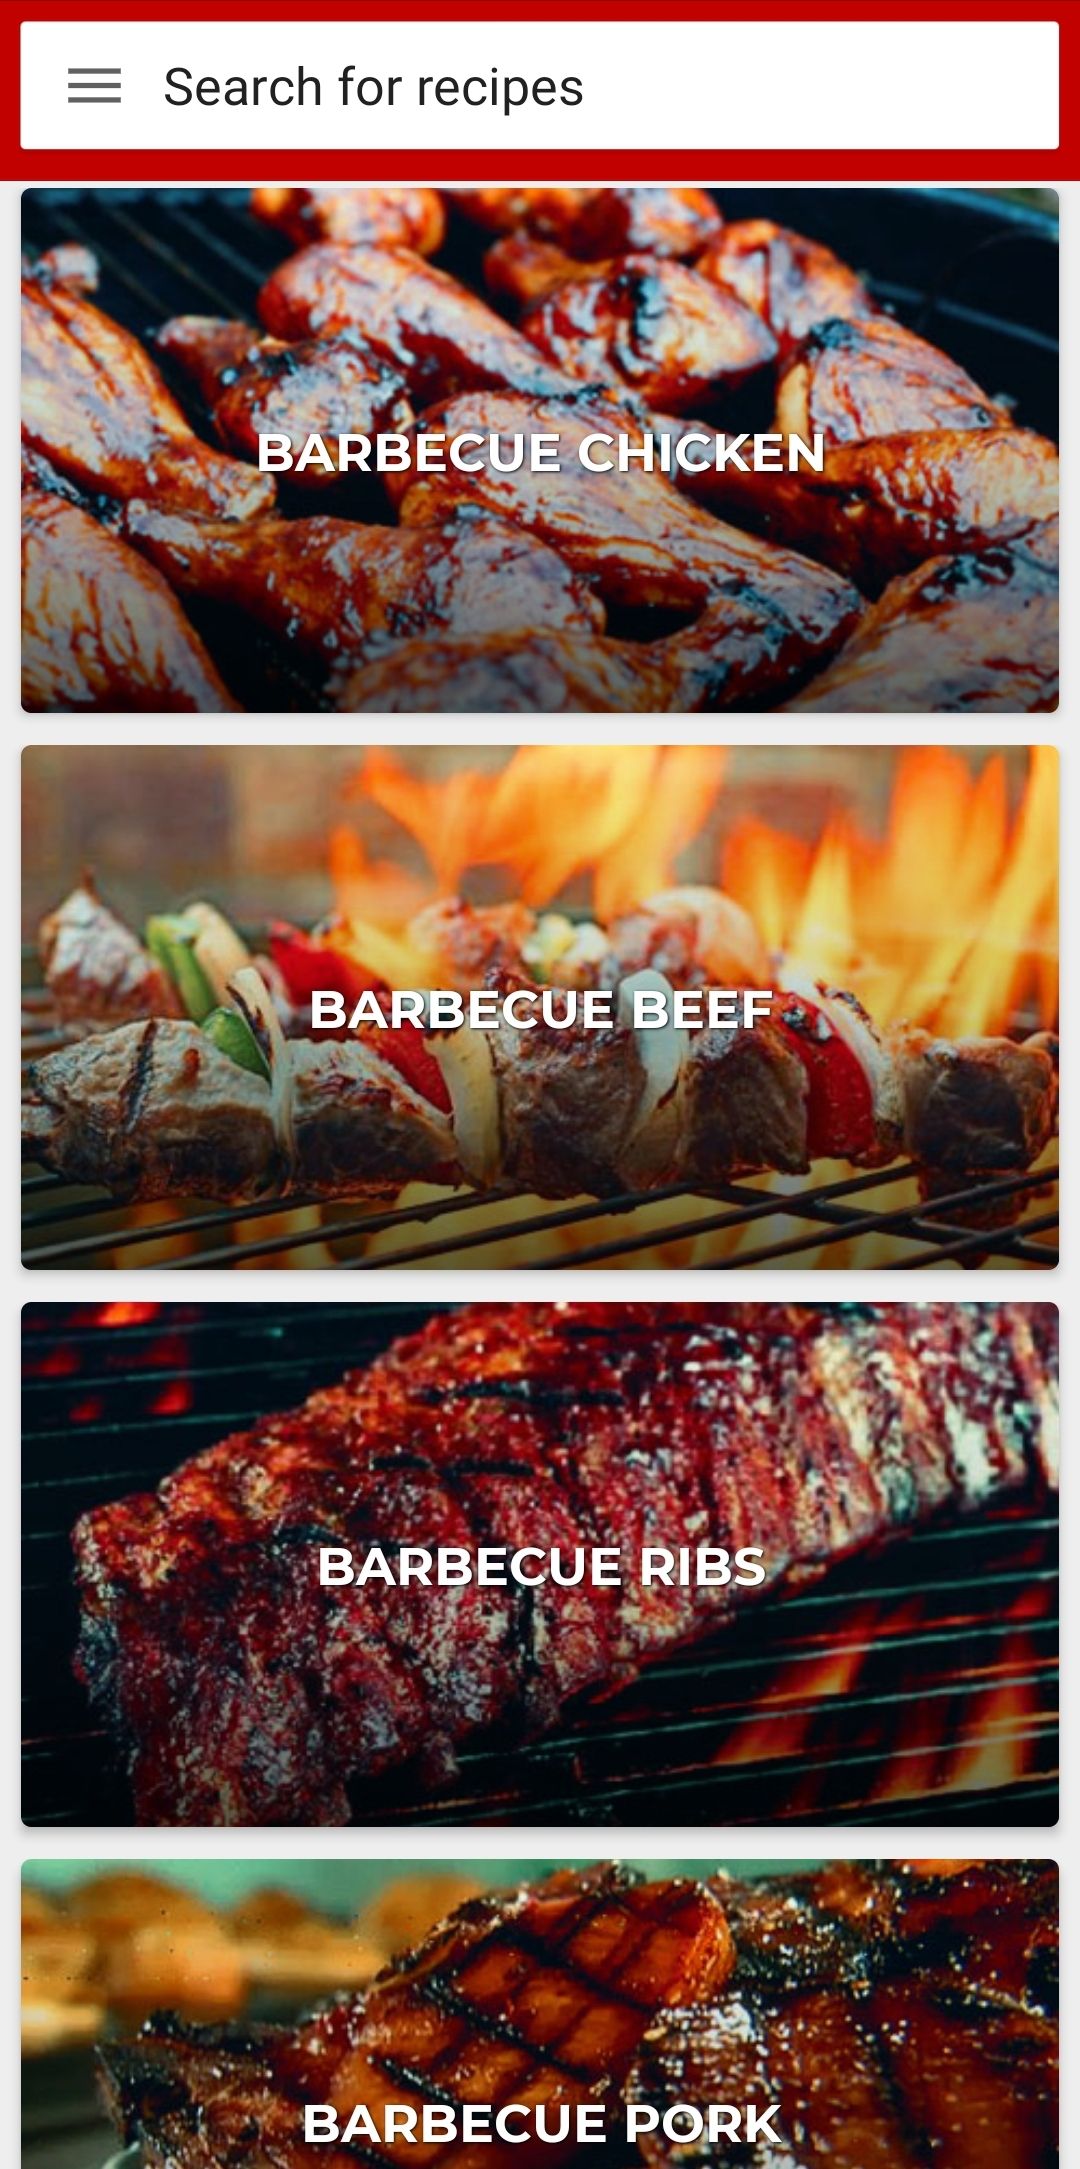 The main recipe browser in Barbecue Grill Recipes